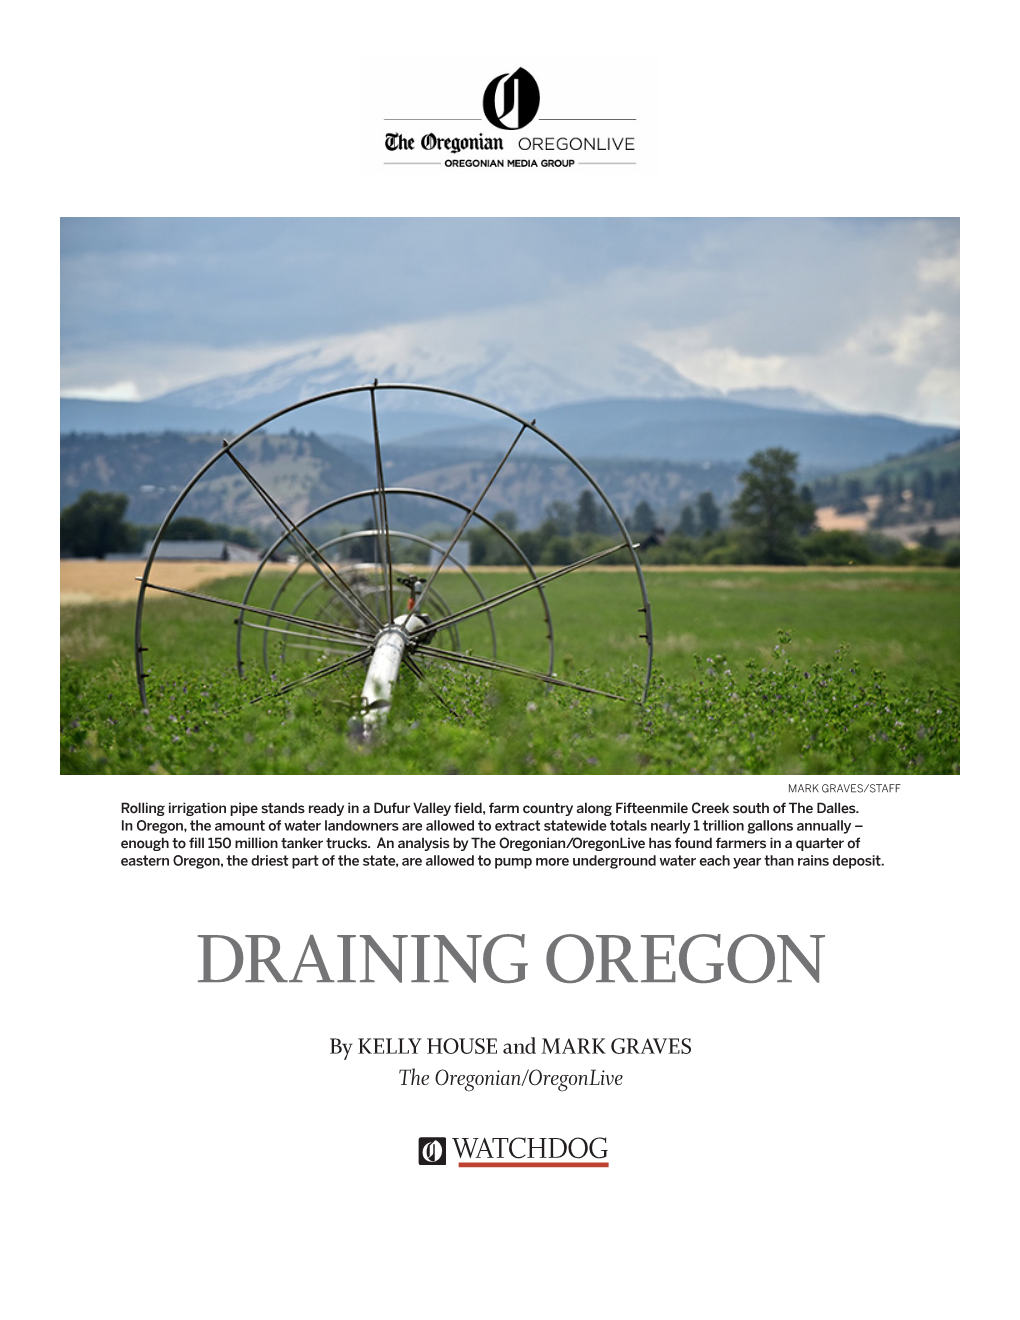 Draining Oregon